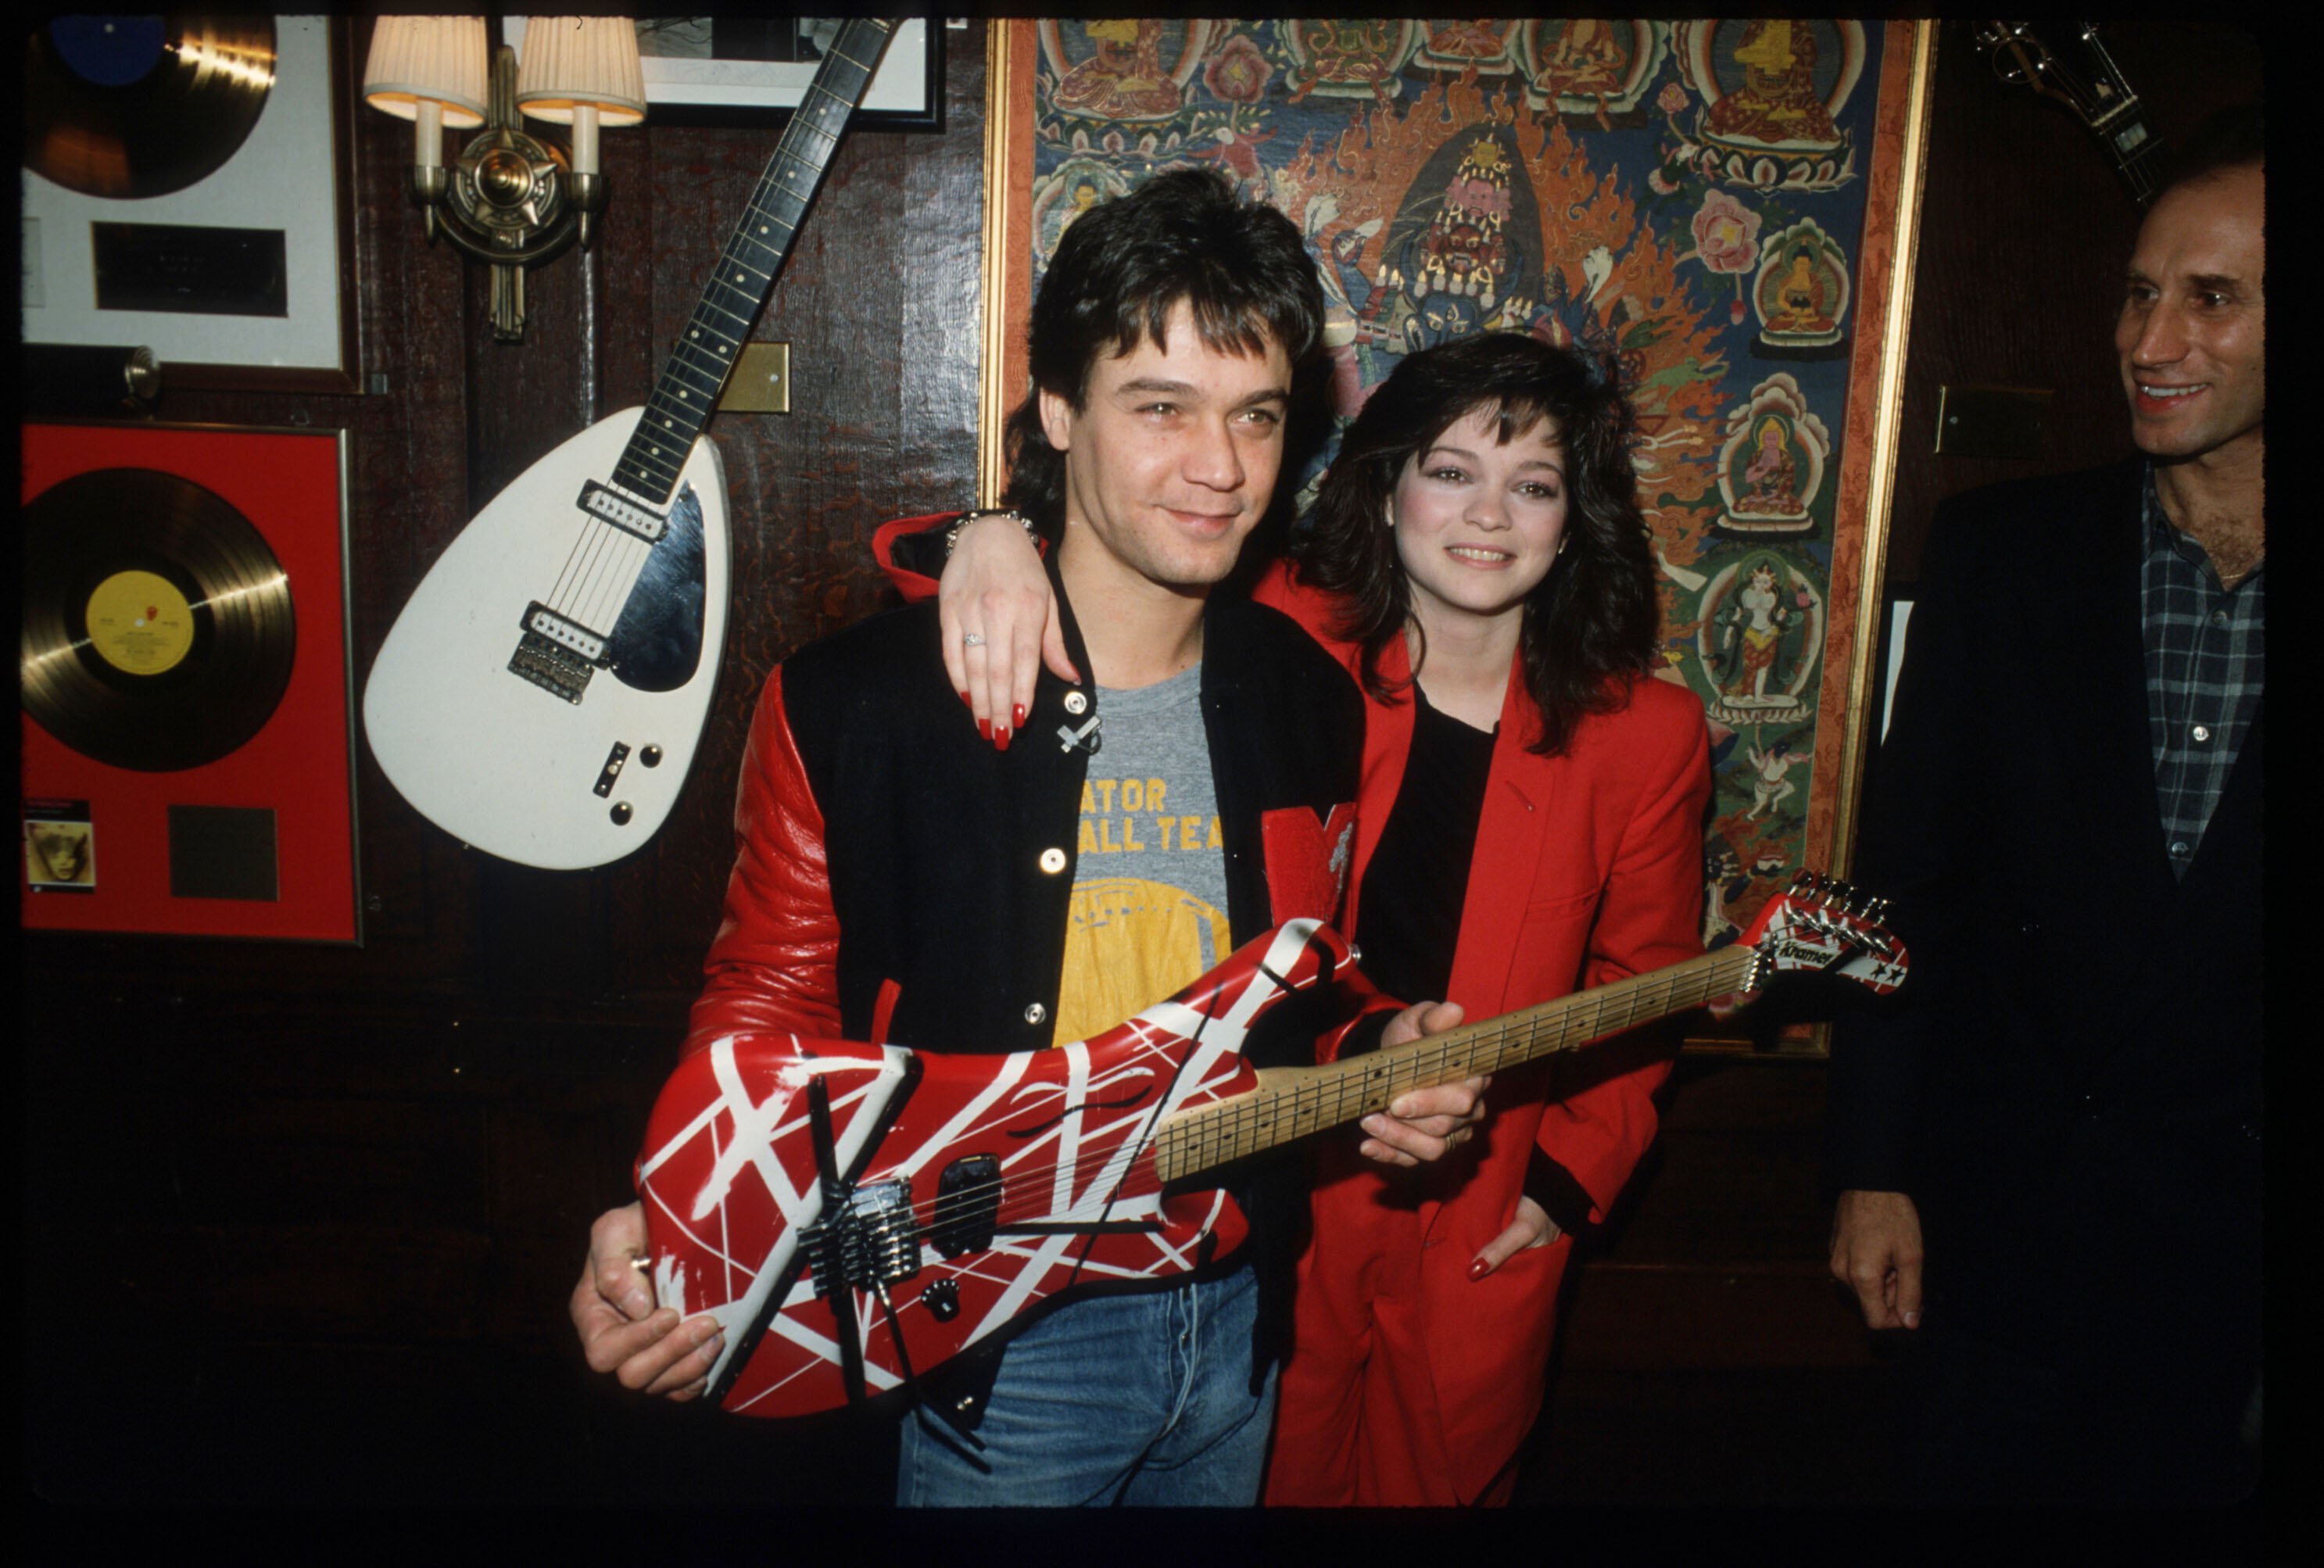 Eddie Van Halen of the rock group Van Halen stands with his wife Valerie Bertinelli February 18, 1995 in New York City. | Photo: Getty Images